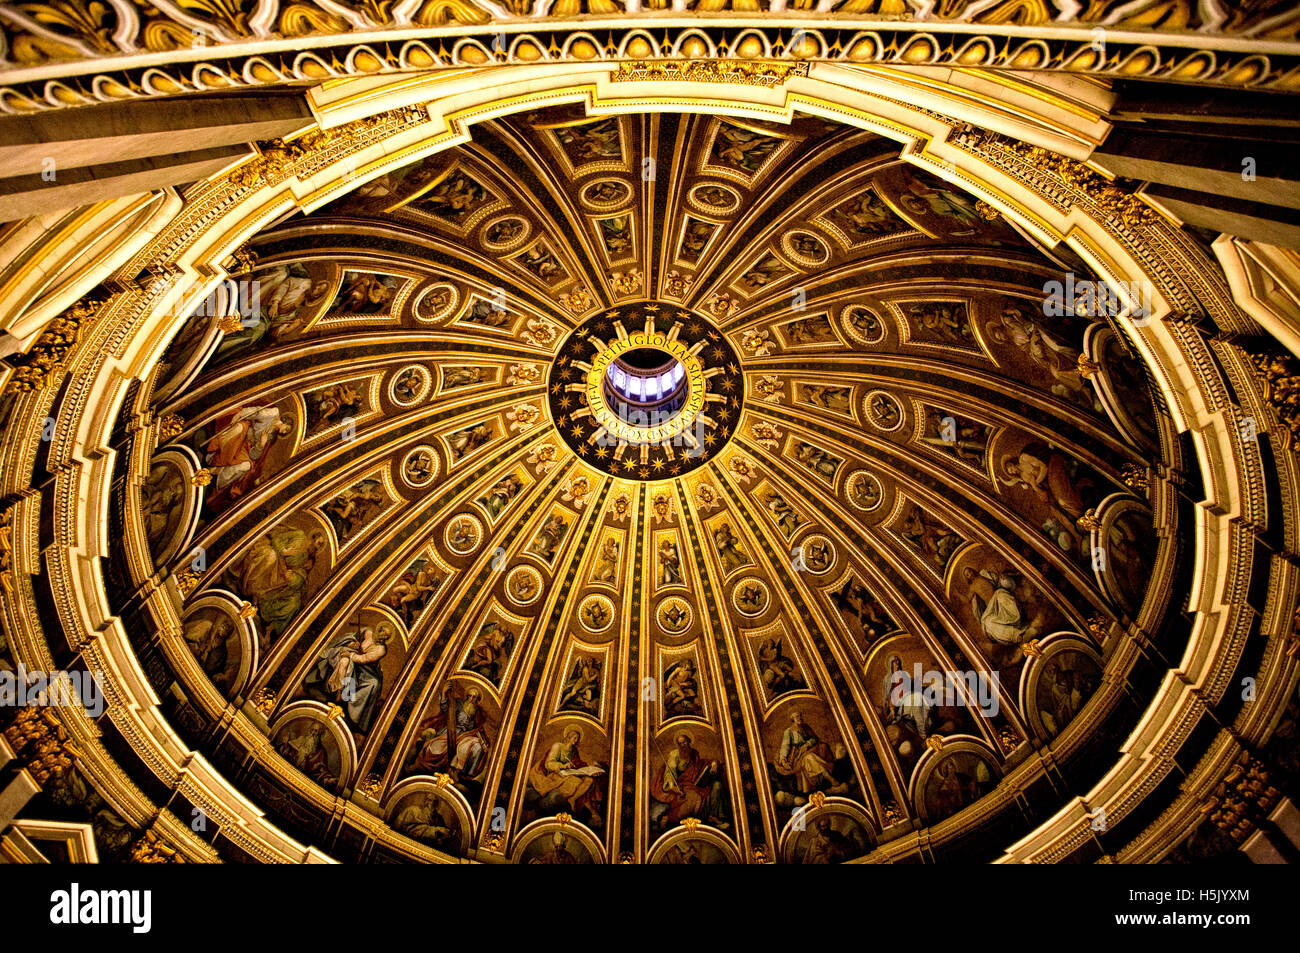 Interior Dome of St Peter's Basilica, Vatican City Stock Photo